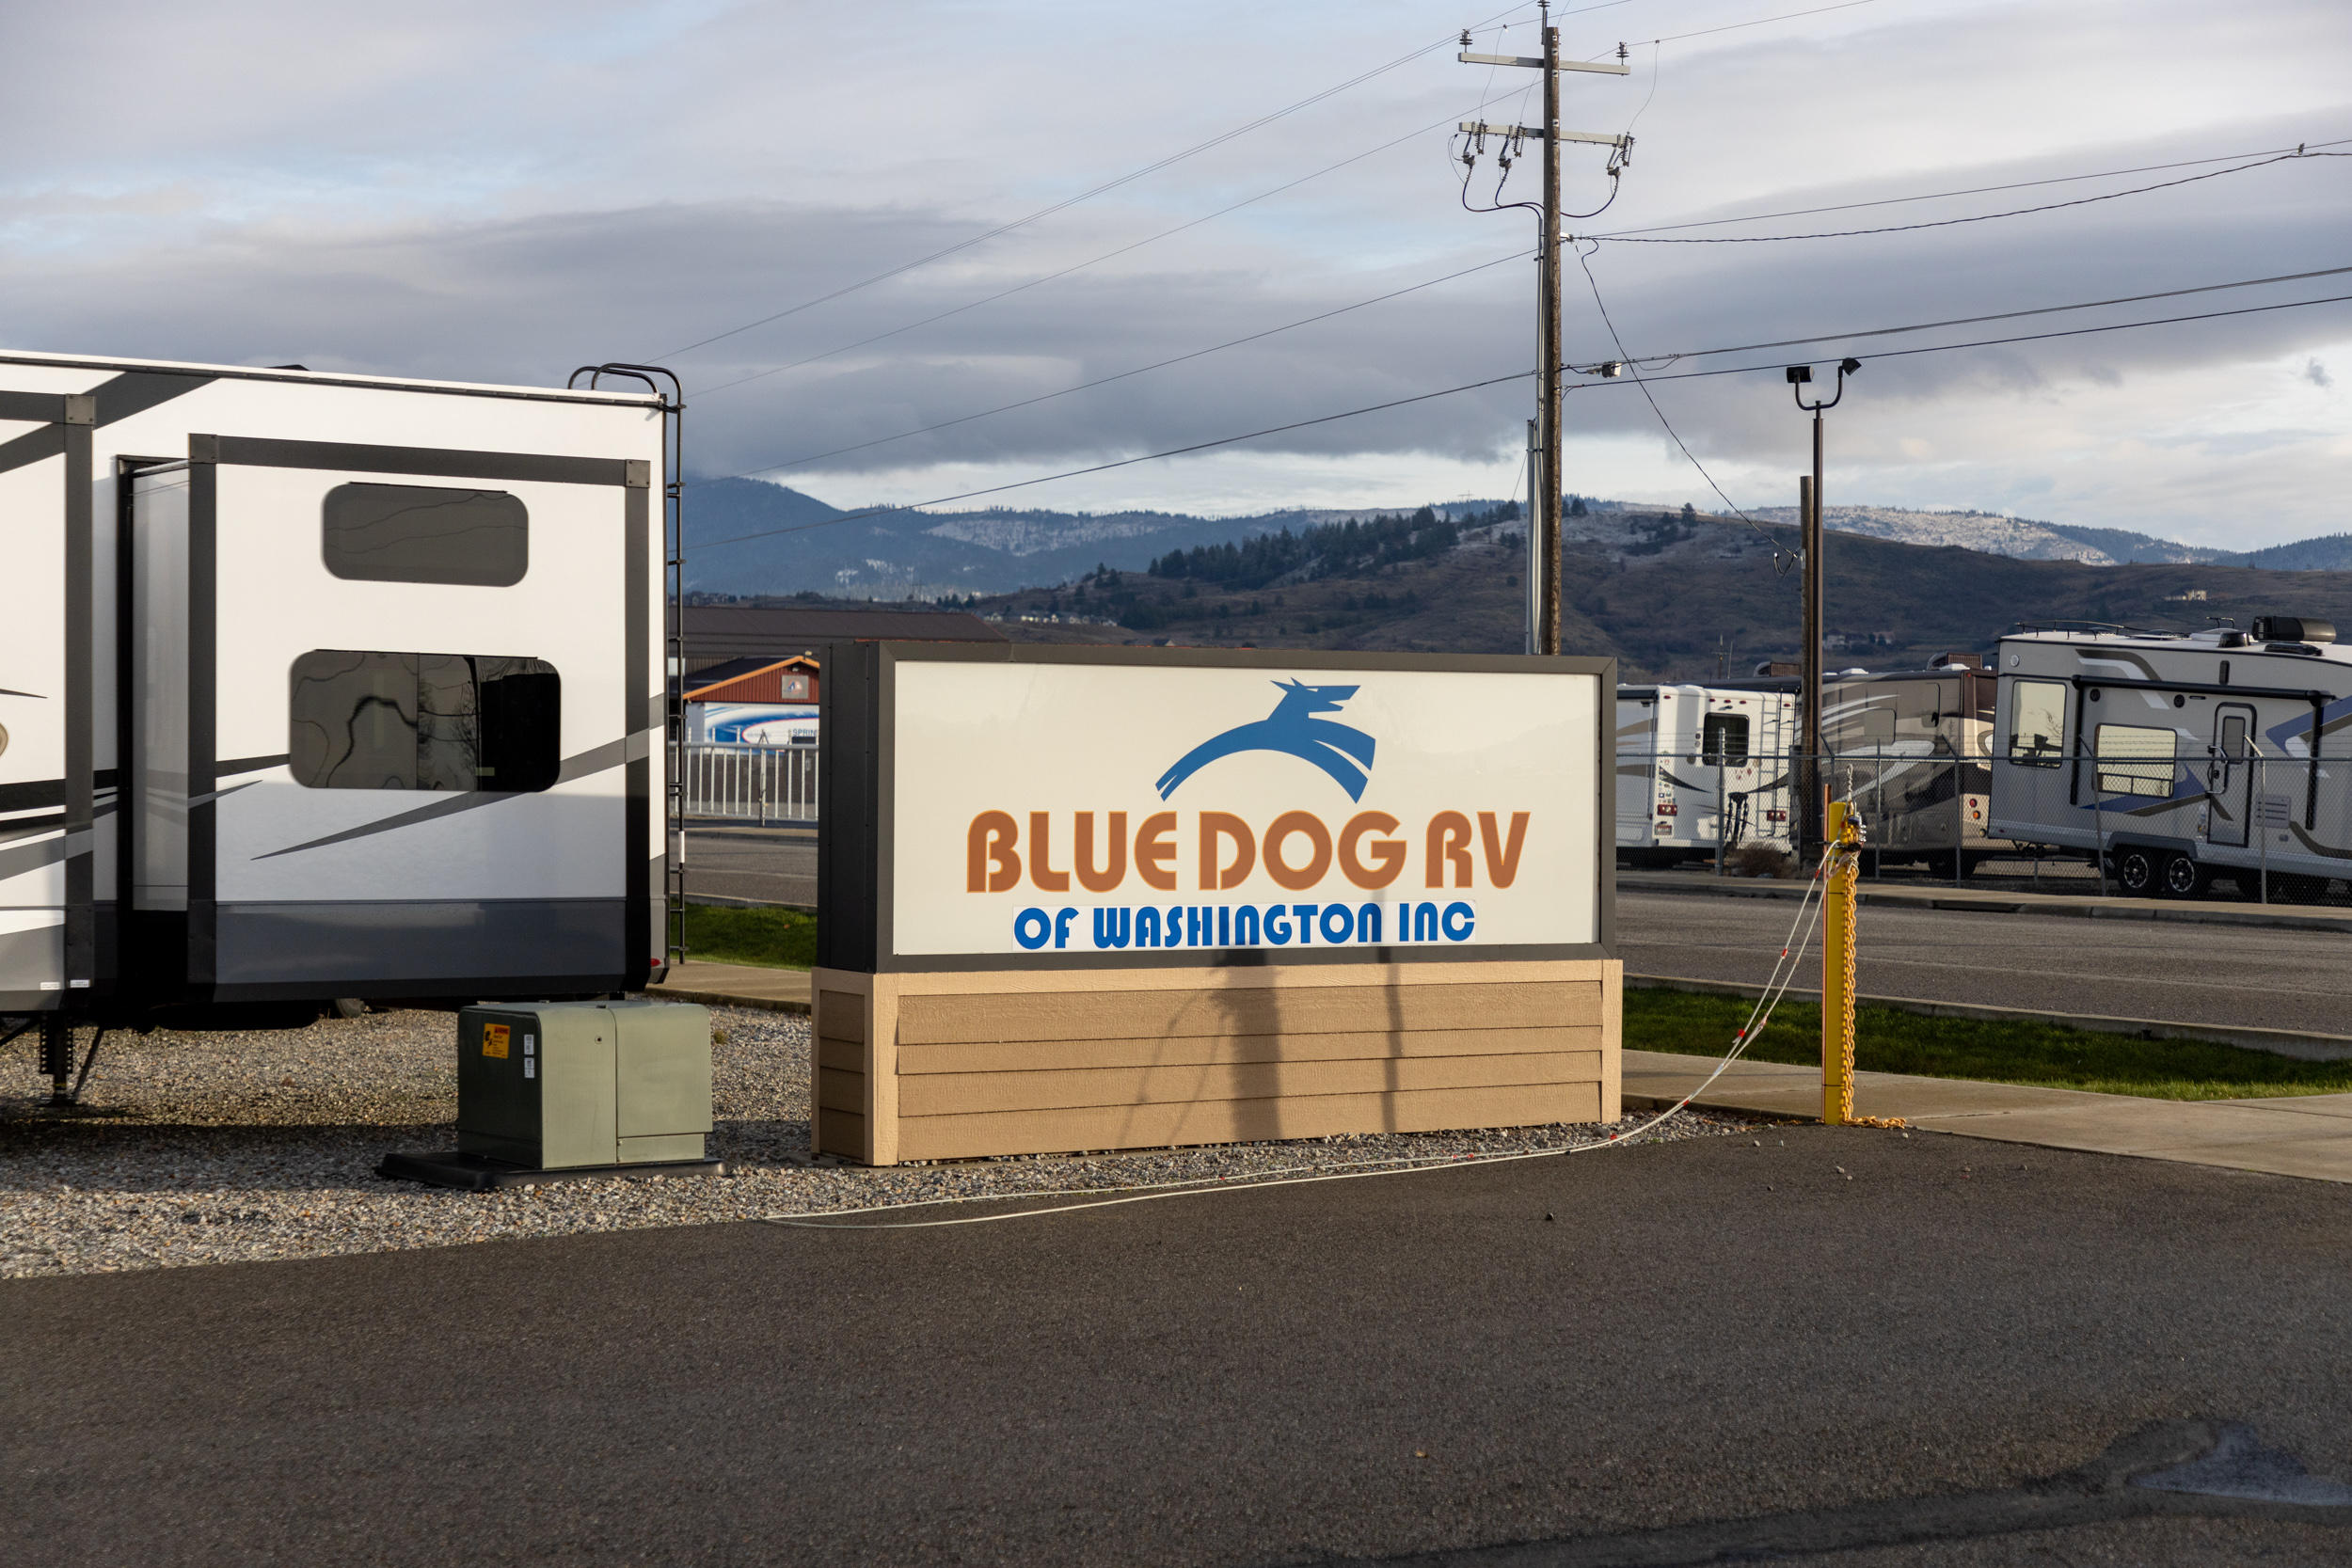 Blue Dog RV Spokane